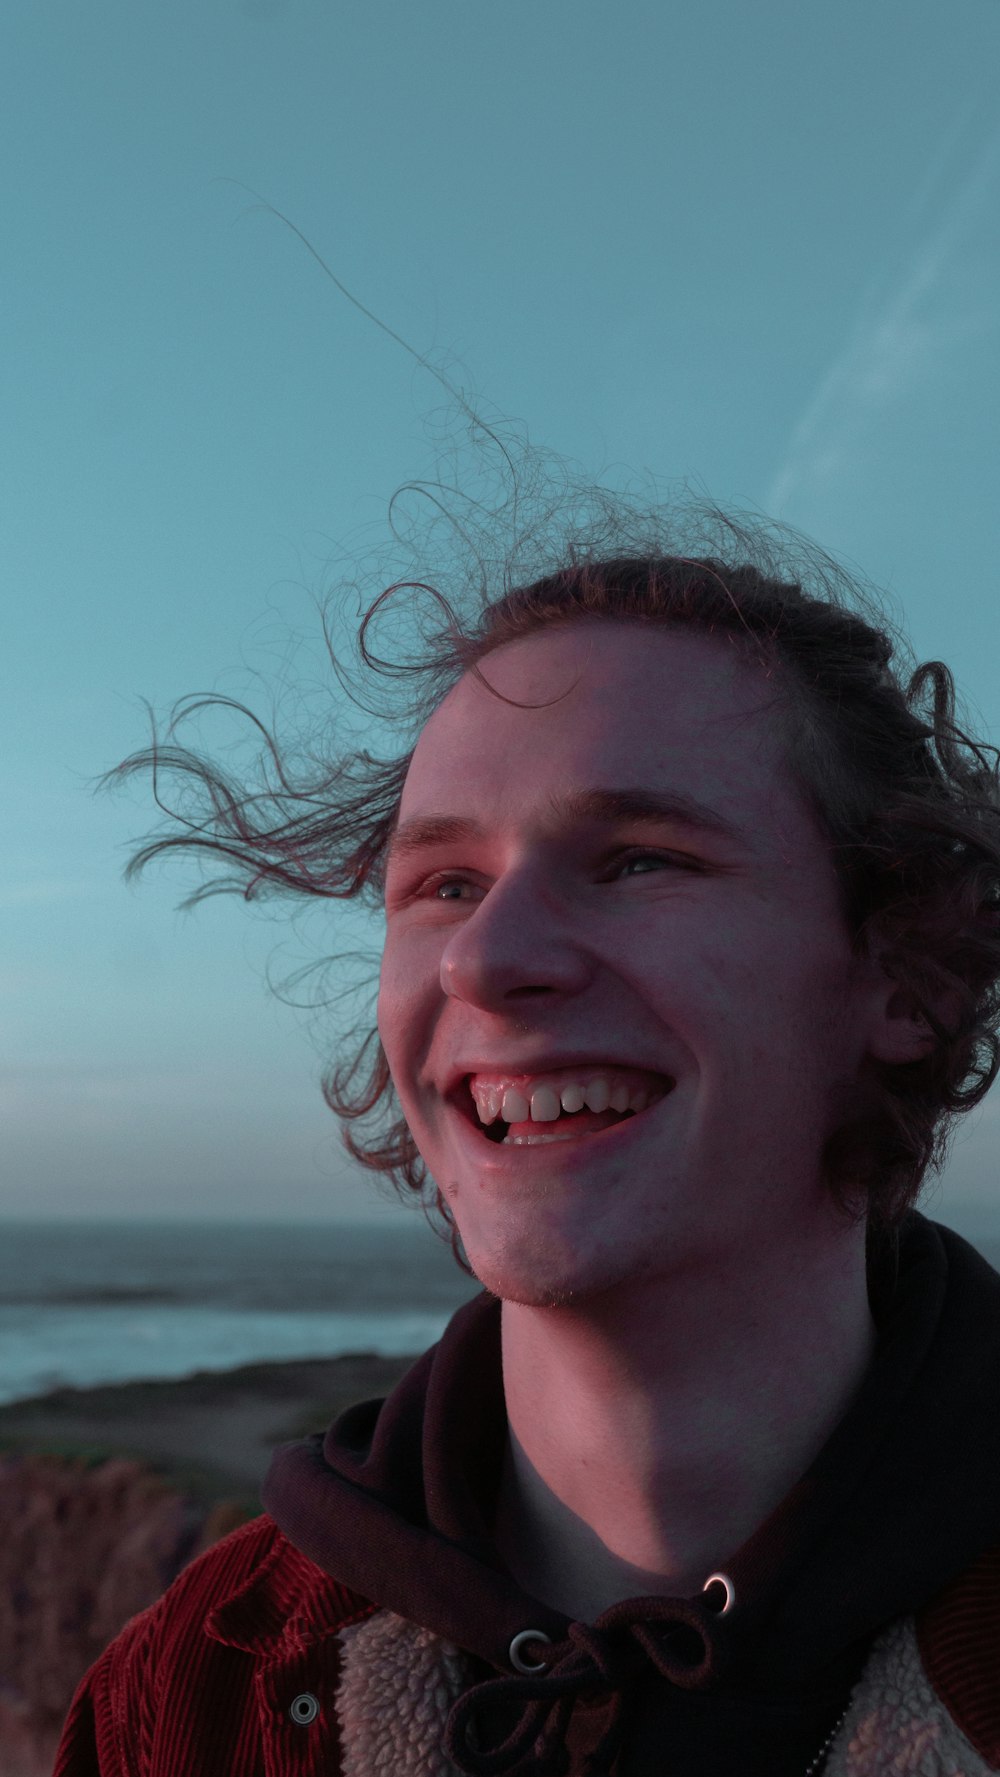 a man with long hair smiling at the camera